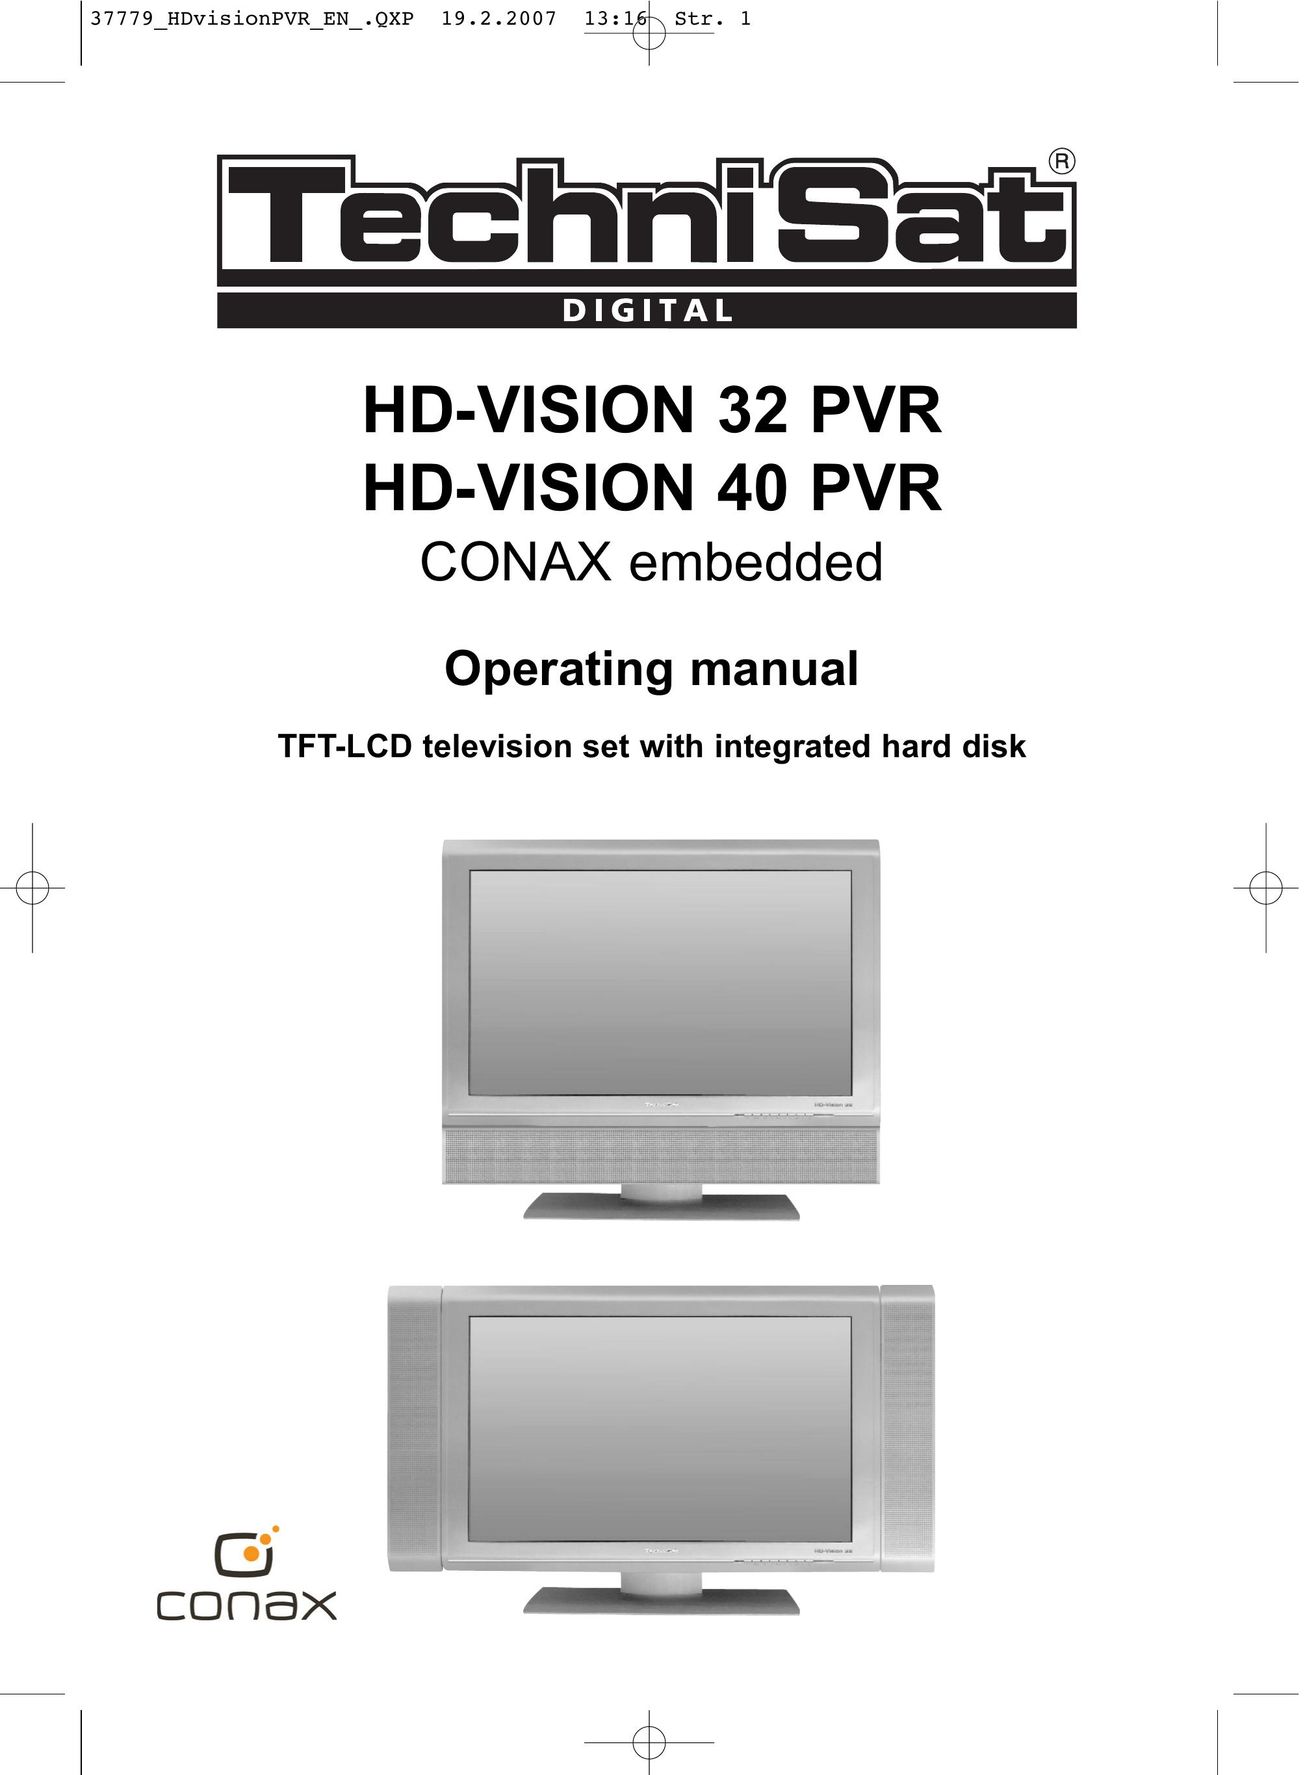 TechniSat HD-VISION 32 PVR Flat Panel Television User Manual